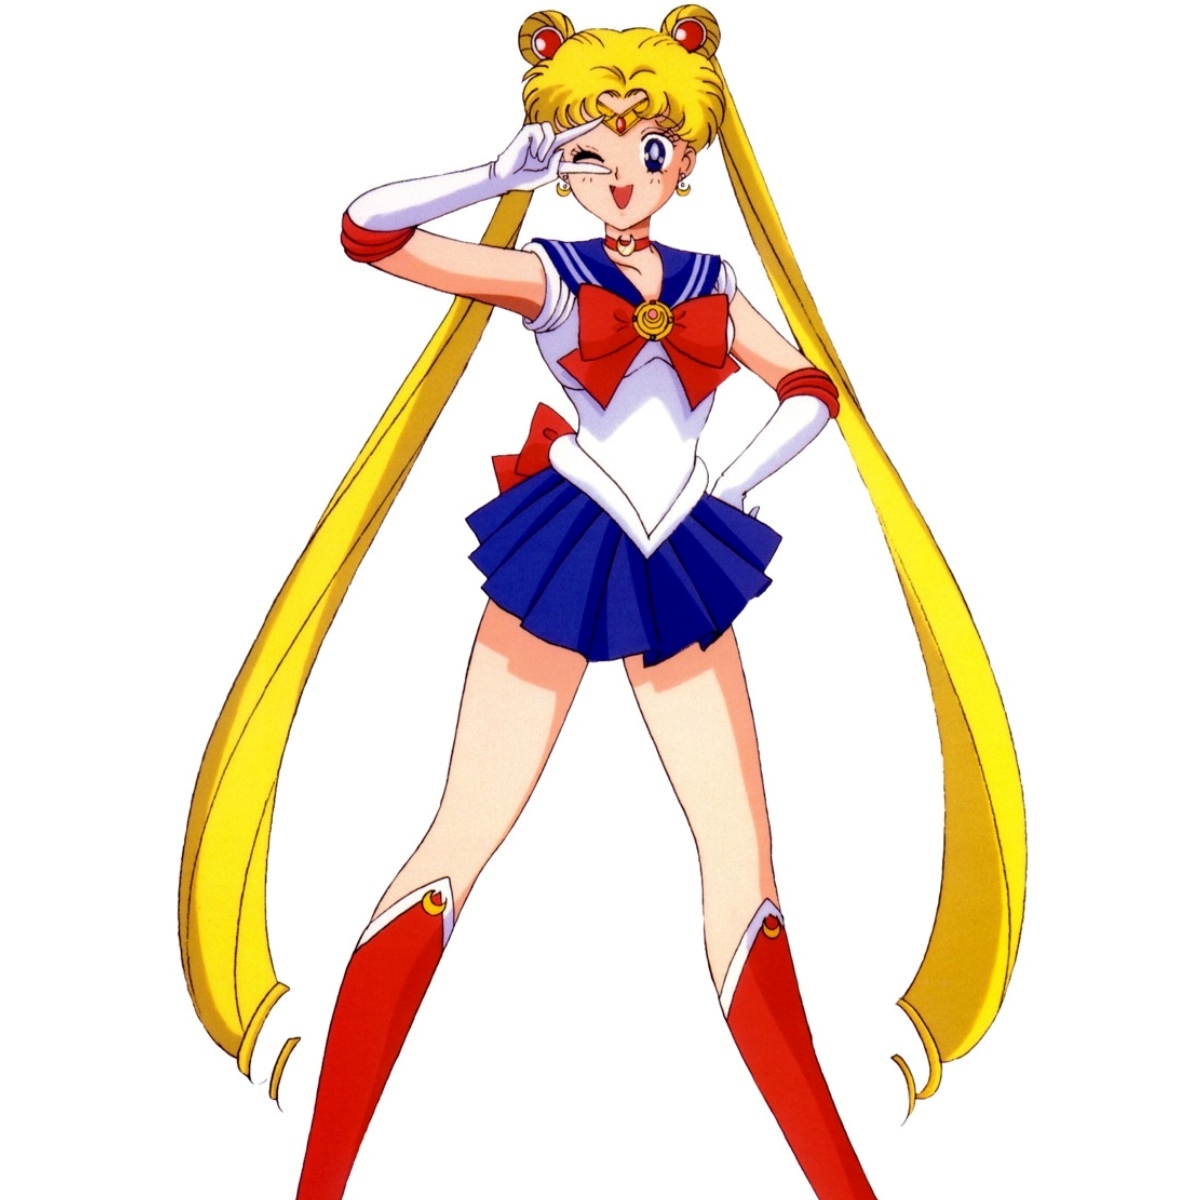 20 Facts About Usagi Tsukino/Sailor Moon (Sailor Moon) 